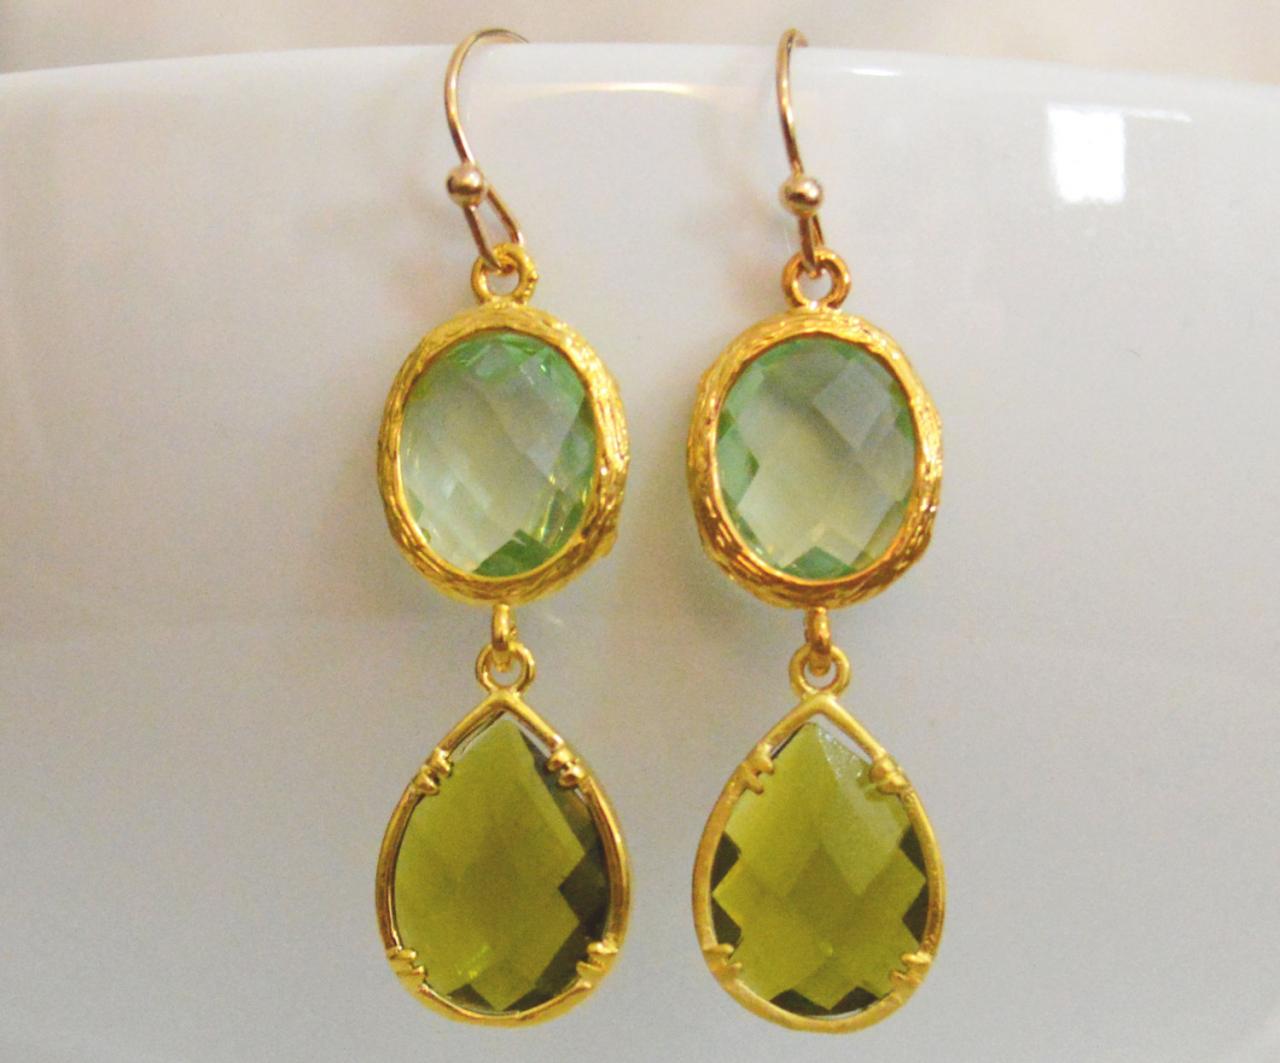 SALE) B-036 Glass earrings, Chrysolite & khaki drop earrings, Dangle earrings, Gold plated earrings/Bridesmaid gifts/Everyday jewelry/